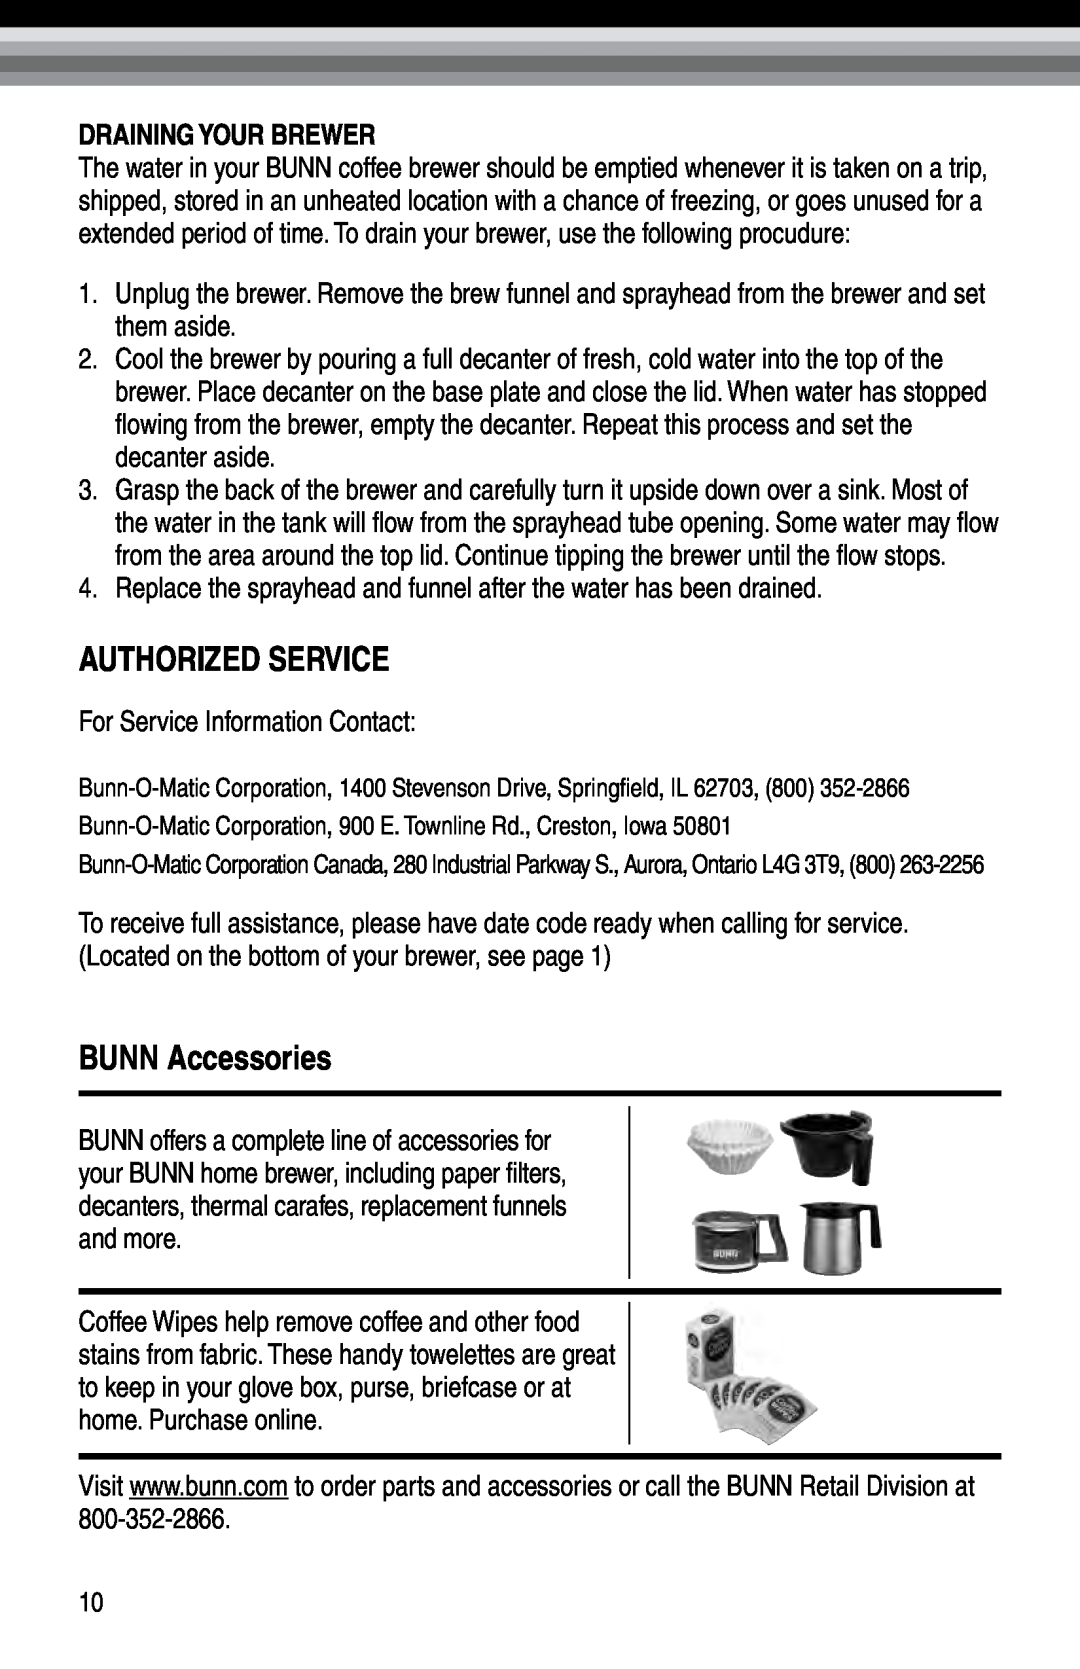 Bunn Bunn BTX-B, 38200.0016 manual Authorized Service, BUNN Accessories, Draining Your Brewer 